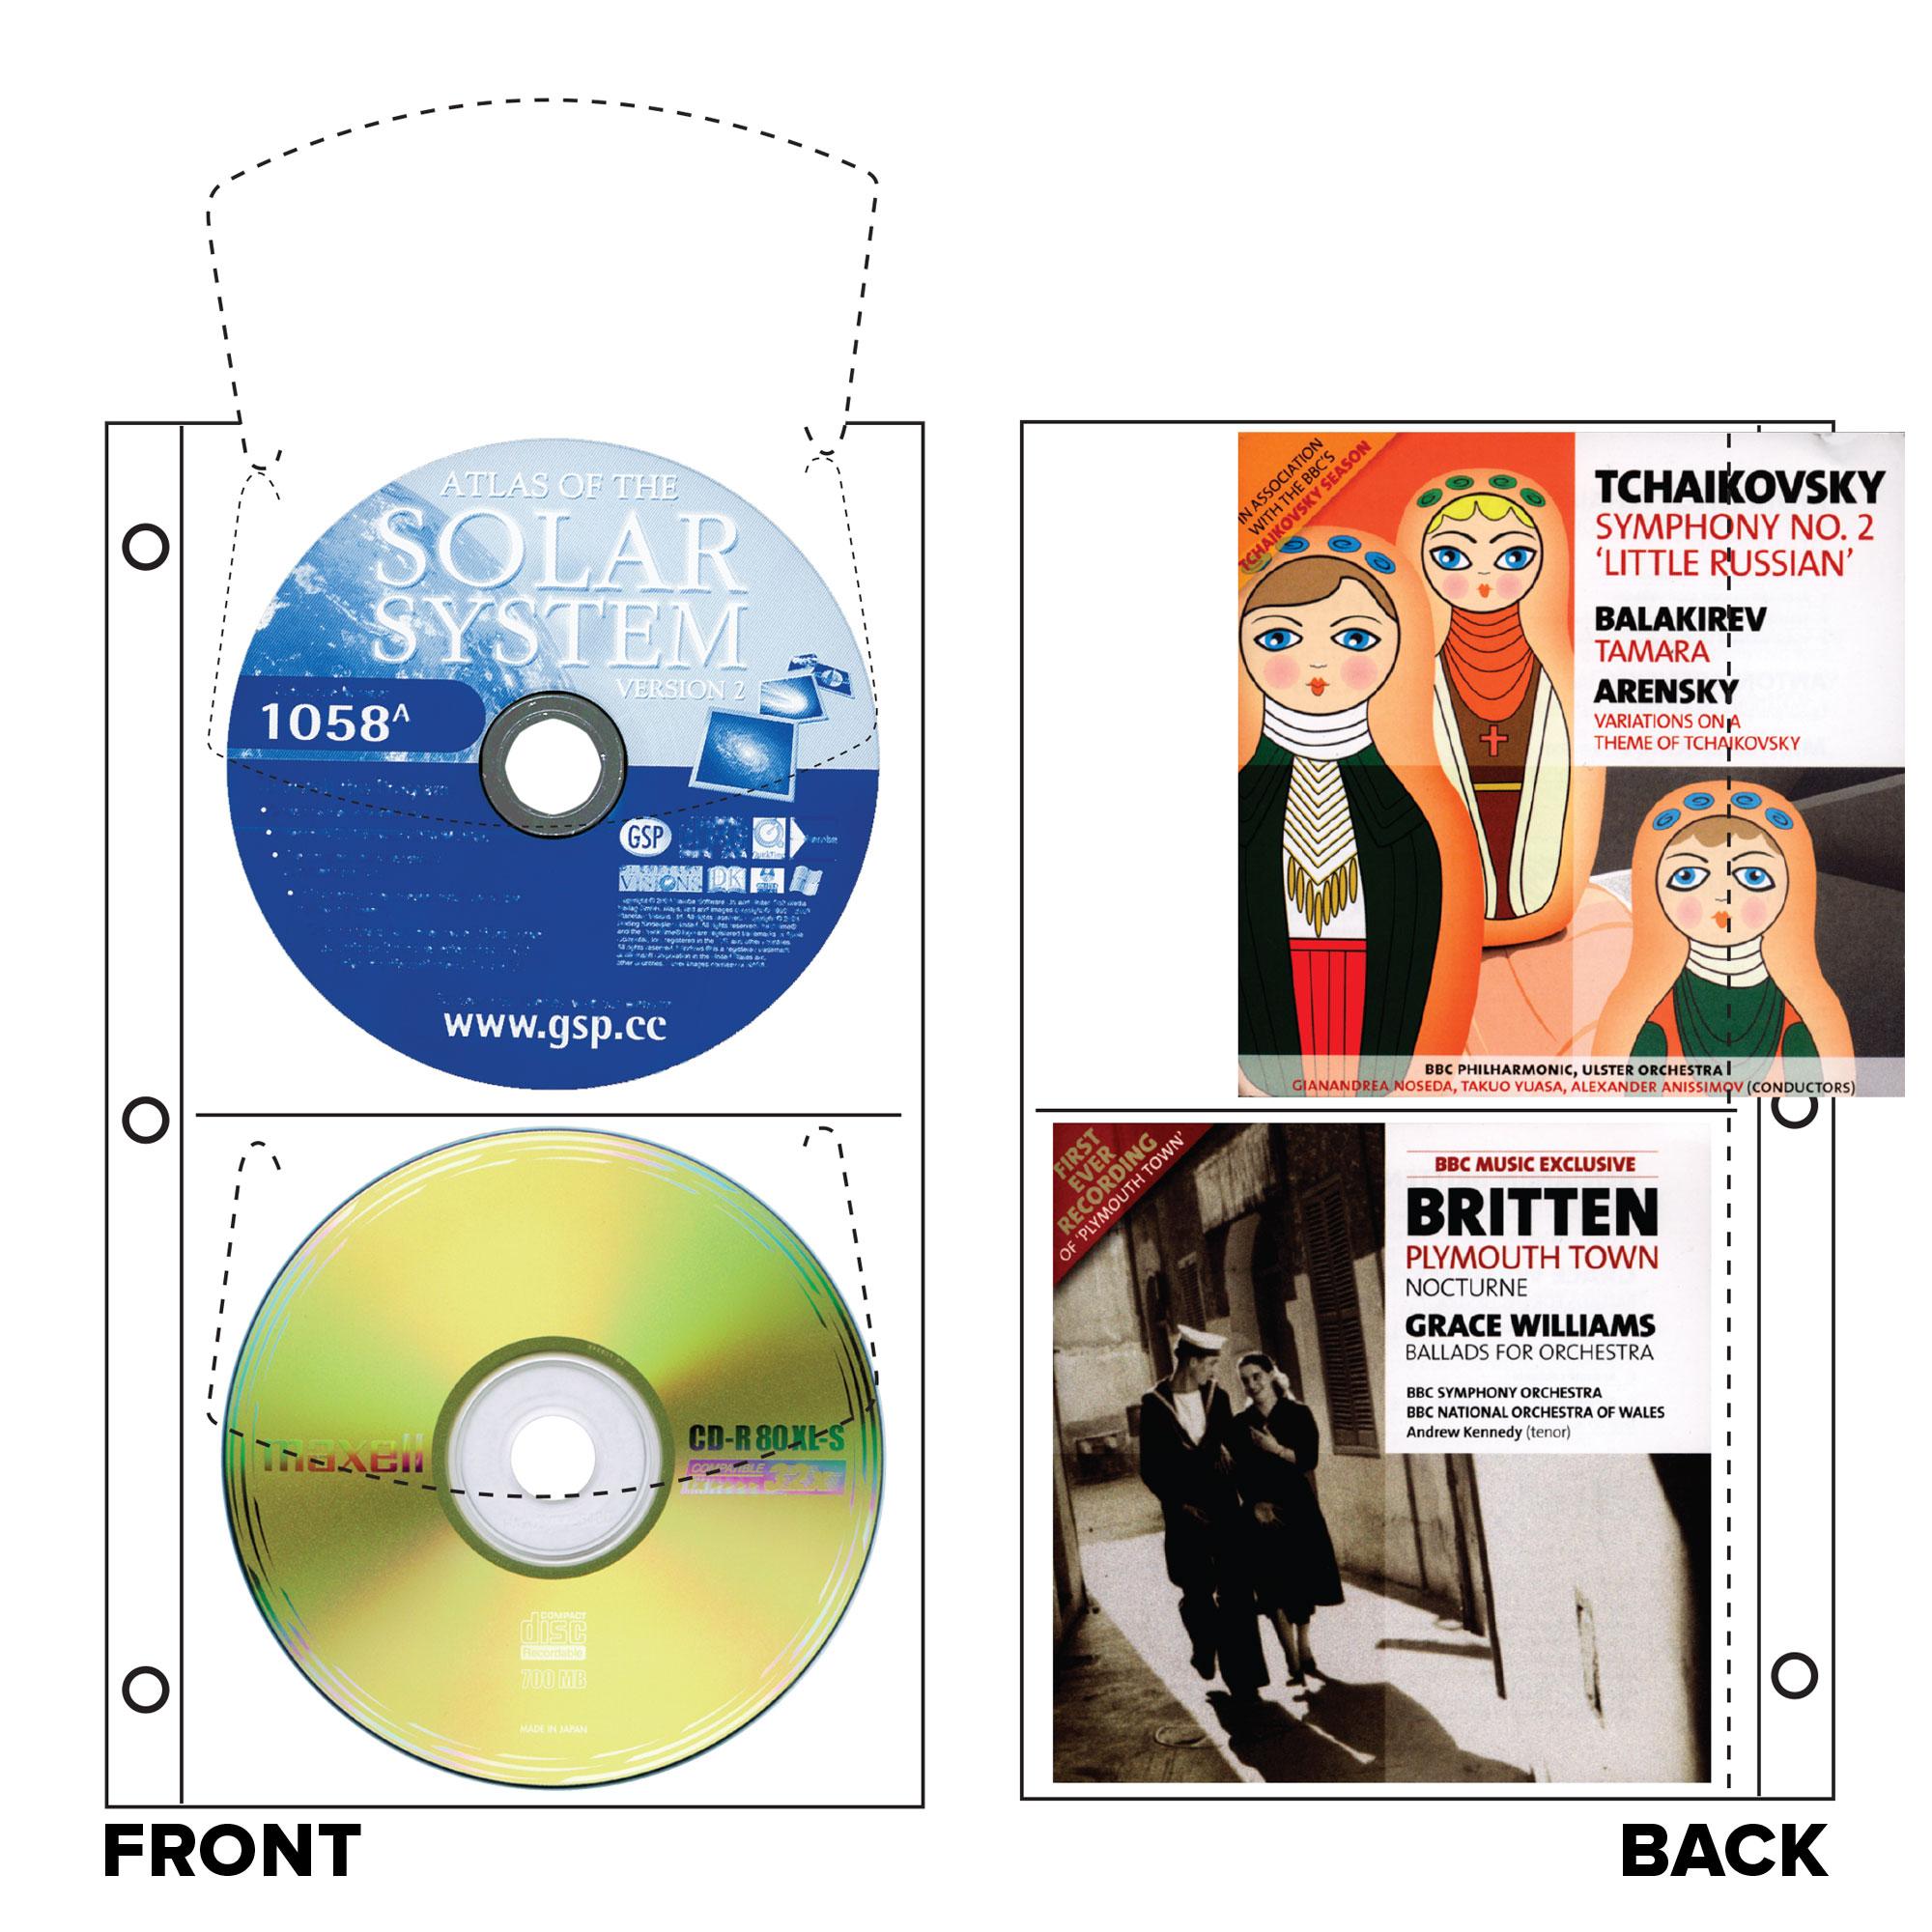 CD/DVD Archival Duo refills Slimline (2 CDs 2 covers) - White - Pack of 10